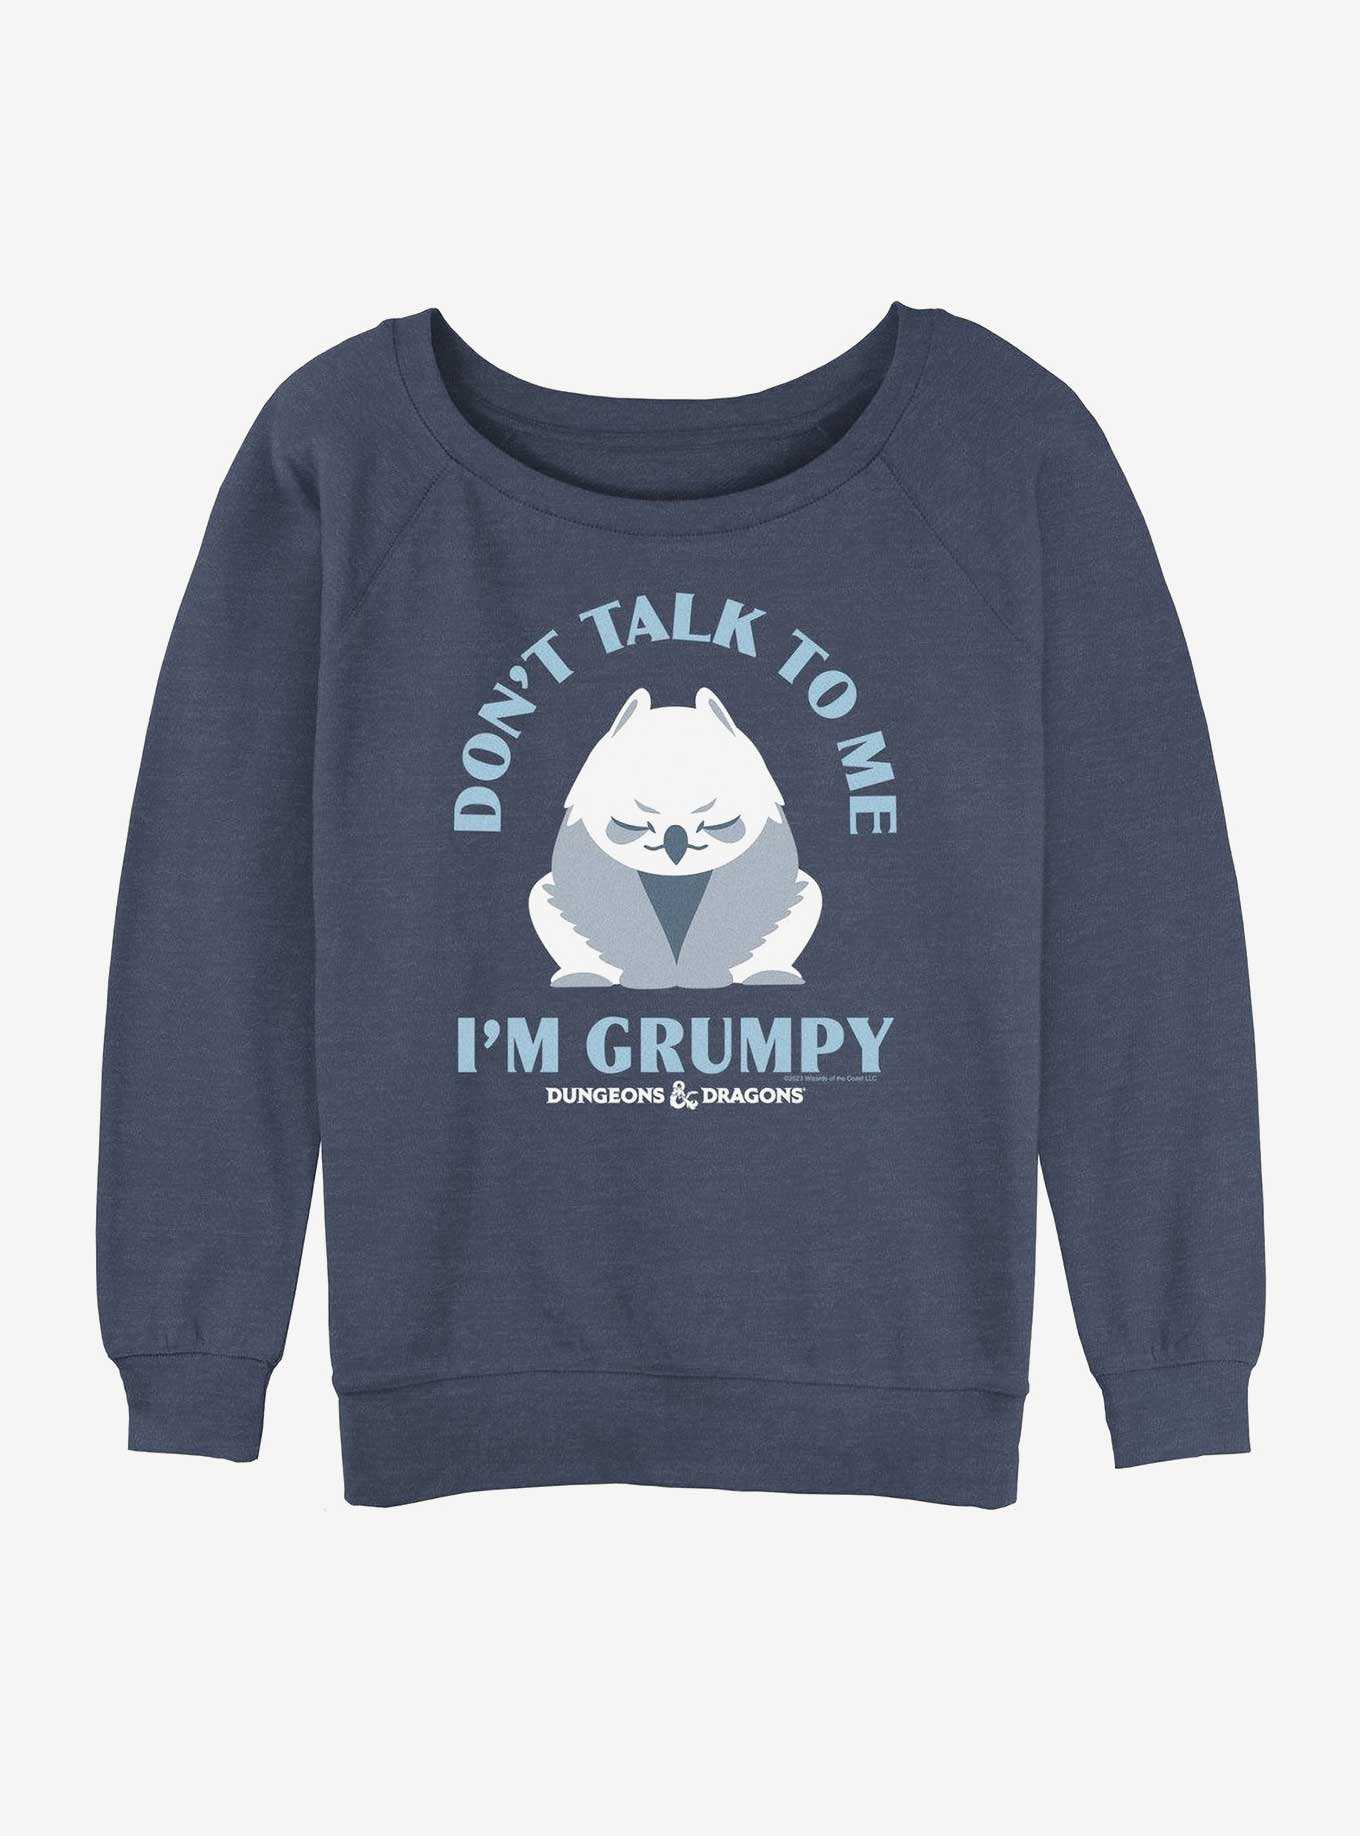 Dungeons & Dragons Grumpy Owlbear Girls Slouchy Sweatshirt, , hi-res